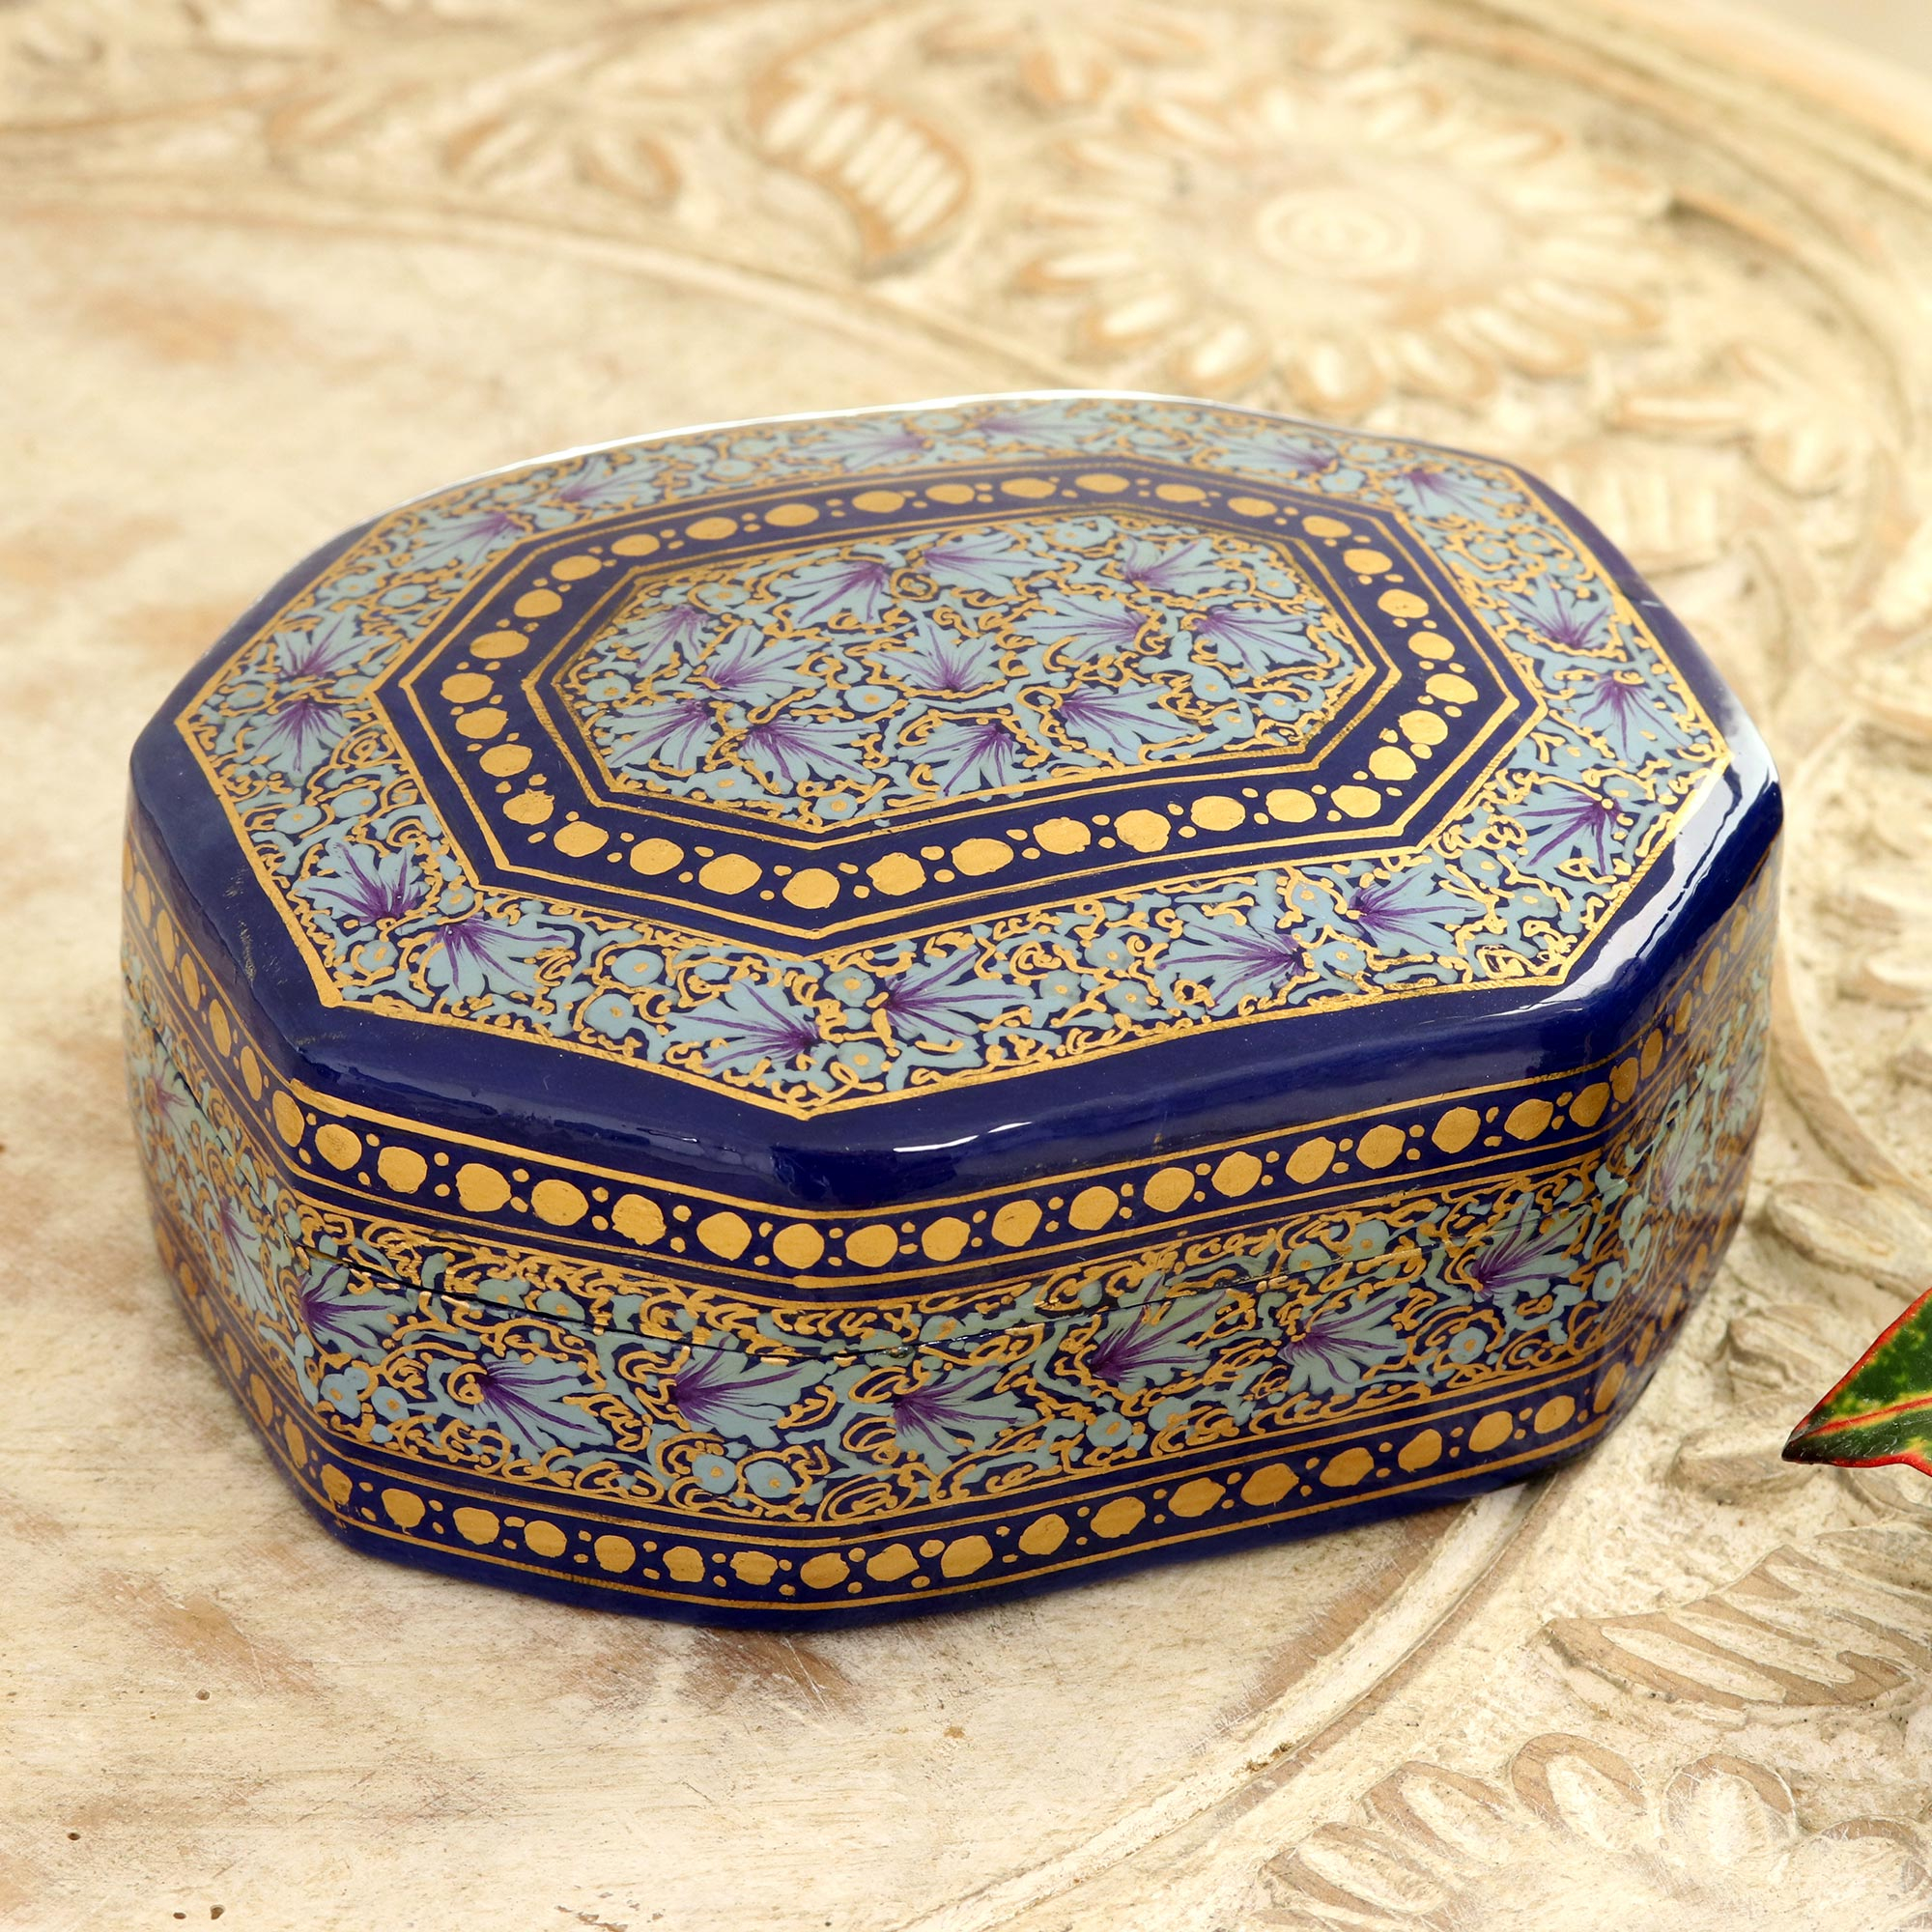 Indian hand made Kashmiri Handcrafted papier mache/papier-mâché jewelry box/ India/decoration/decor/art/blue/gold hand-painted/trinket box